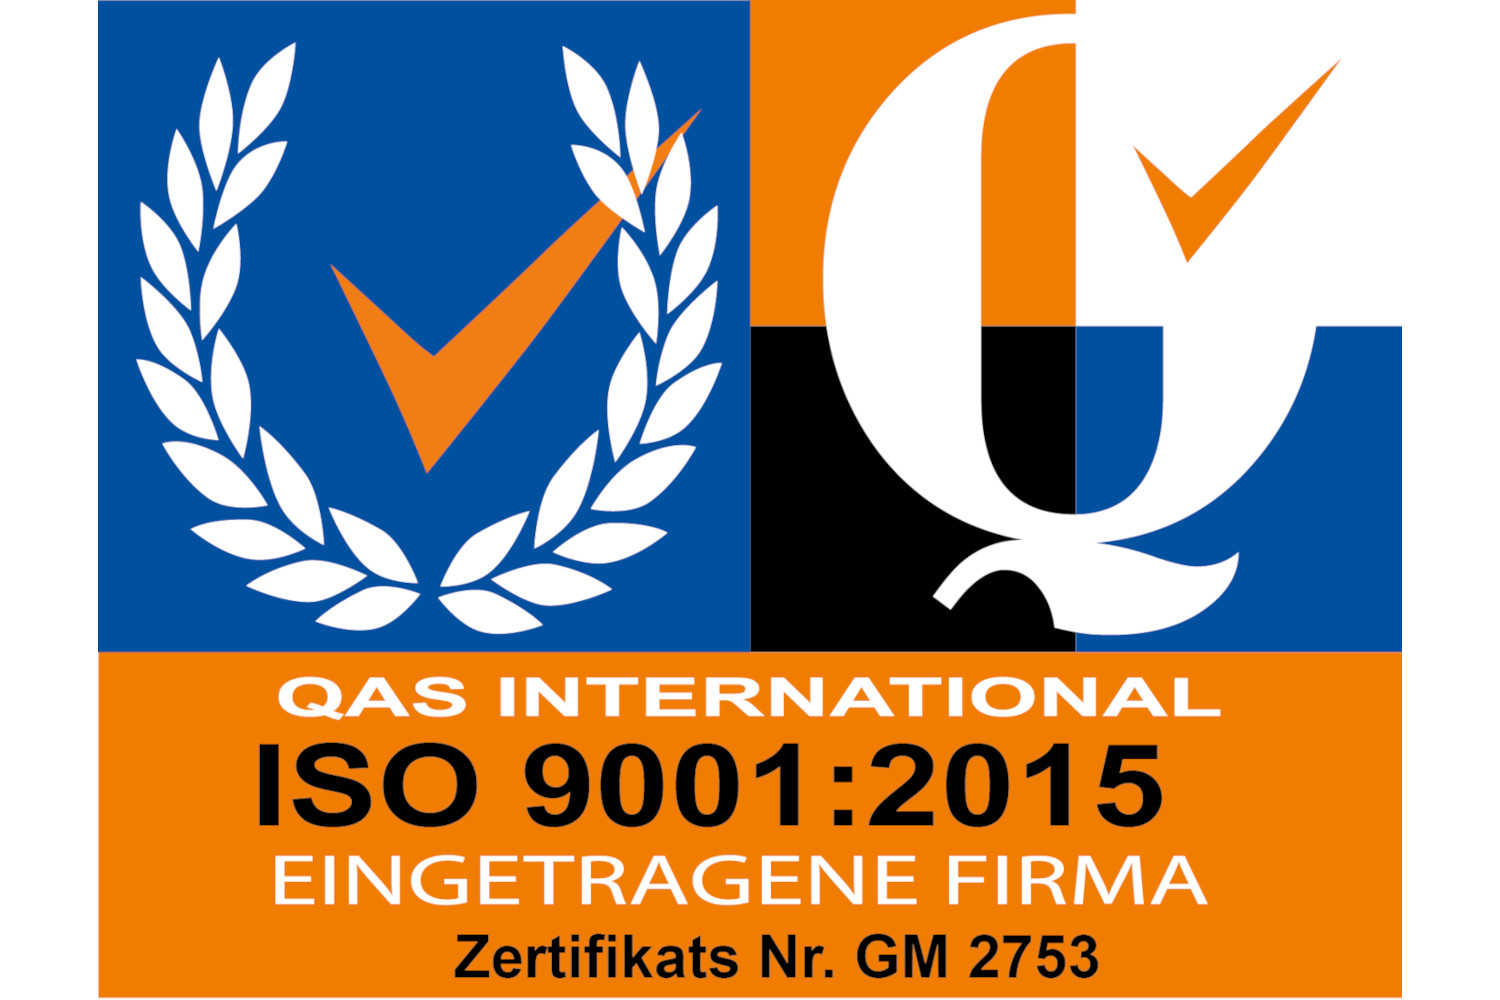 spo-comm goes ISO 9001:2015!